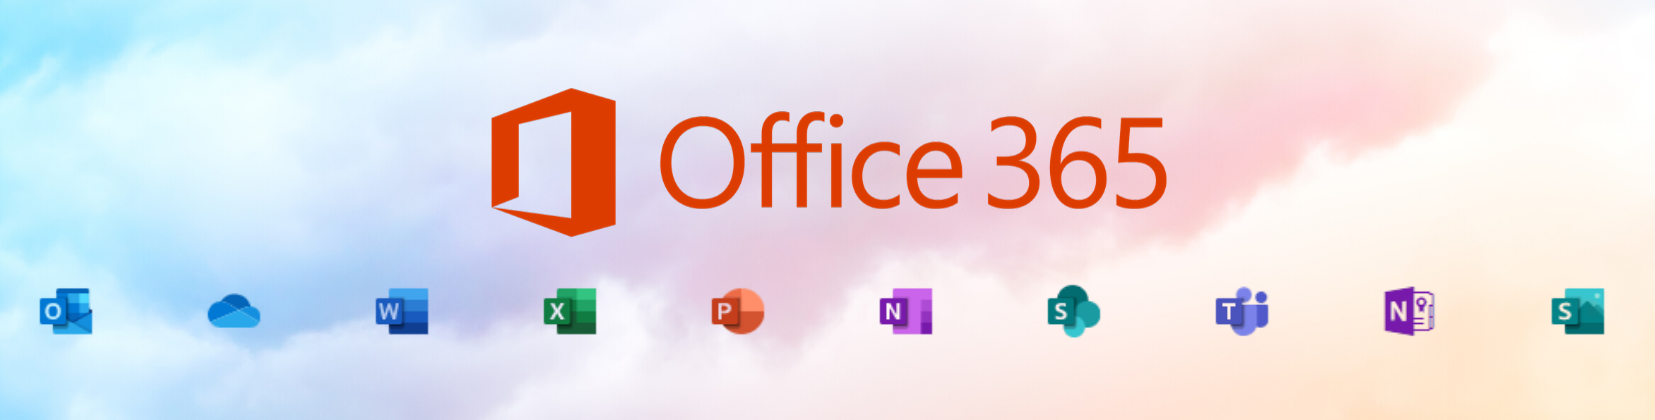 Office 365 Software Banner